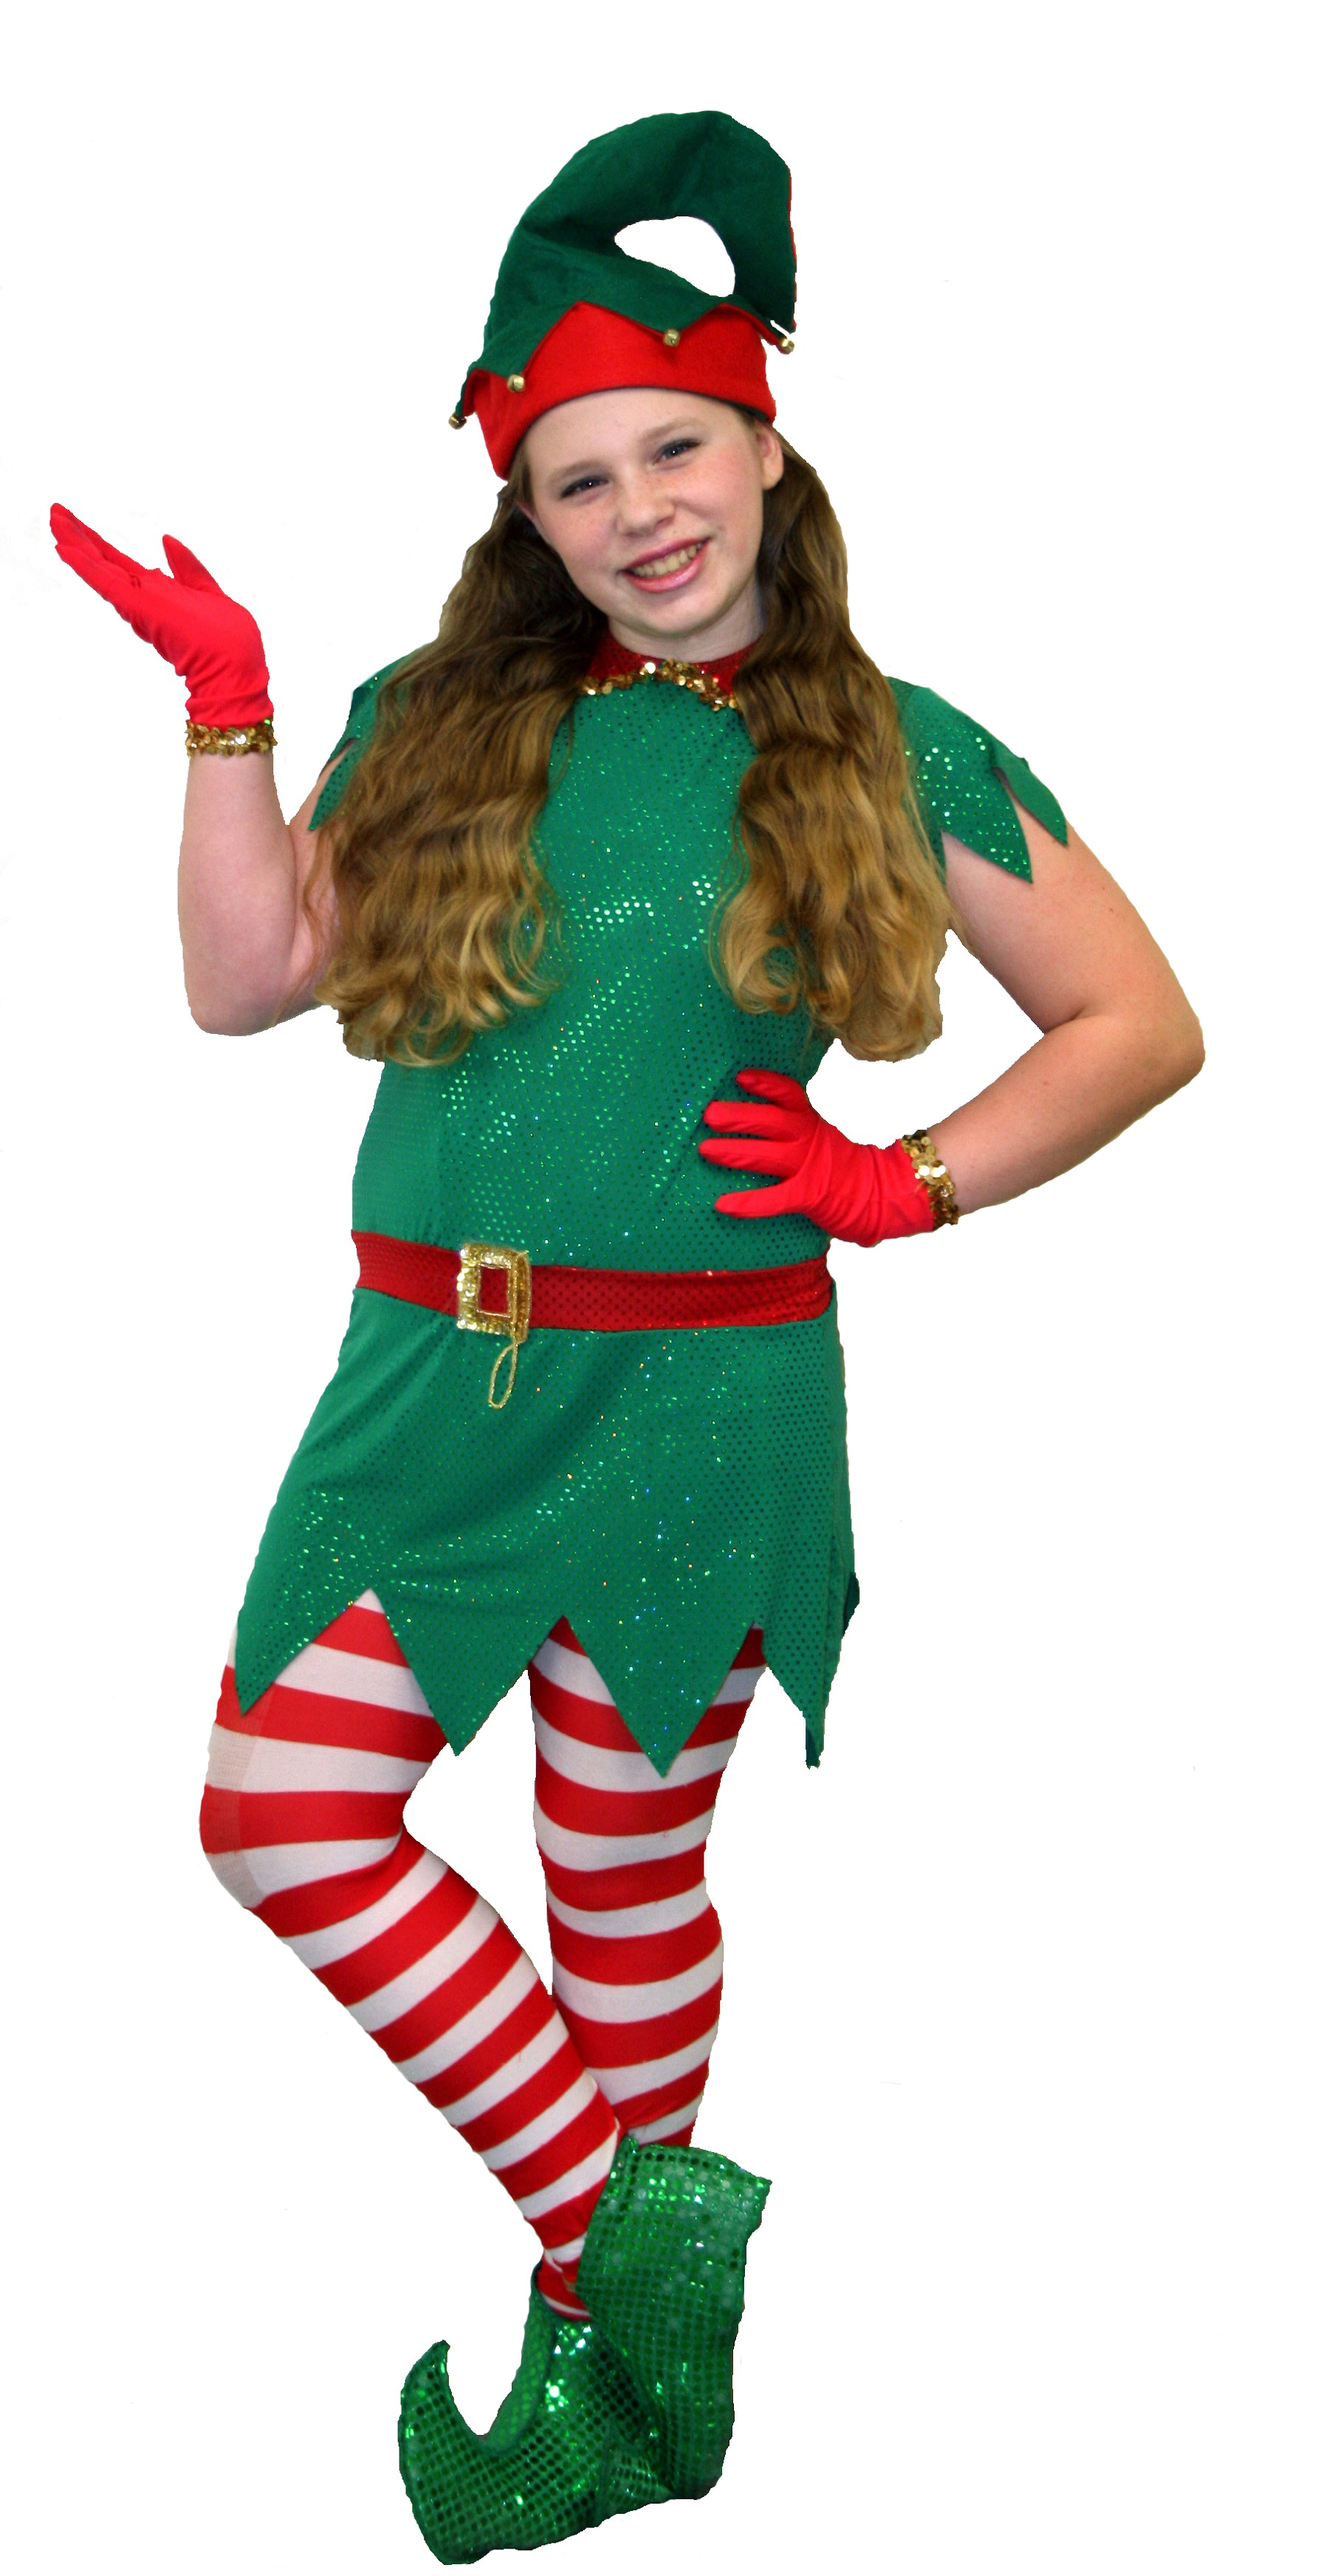 Rose Rose McCleerey Christmas Show Costume Check 2014